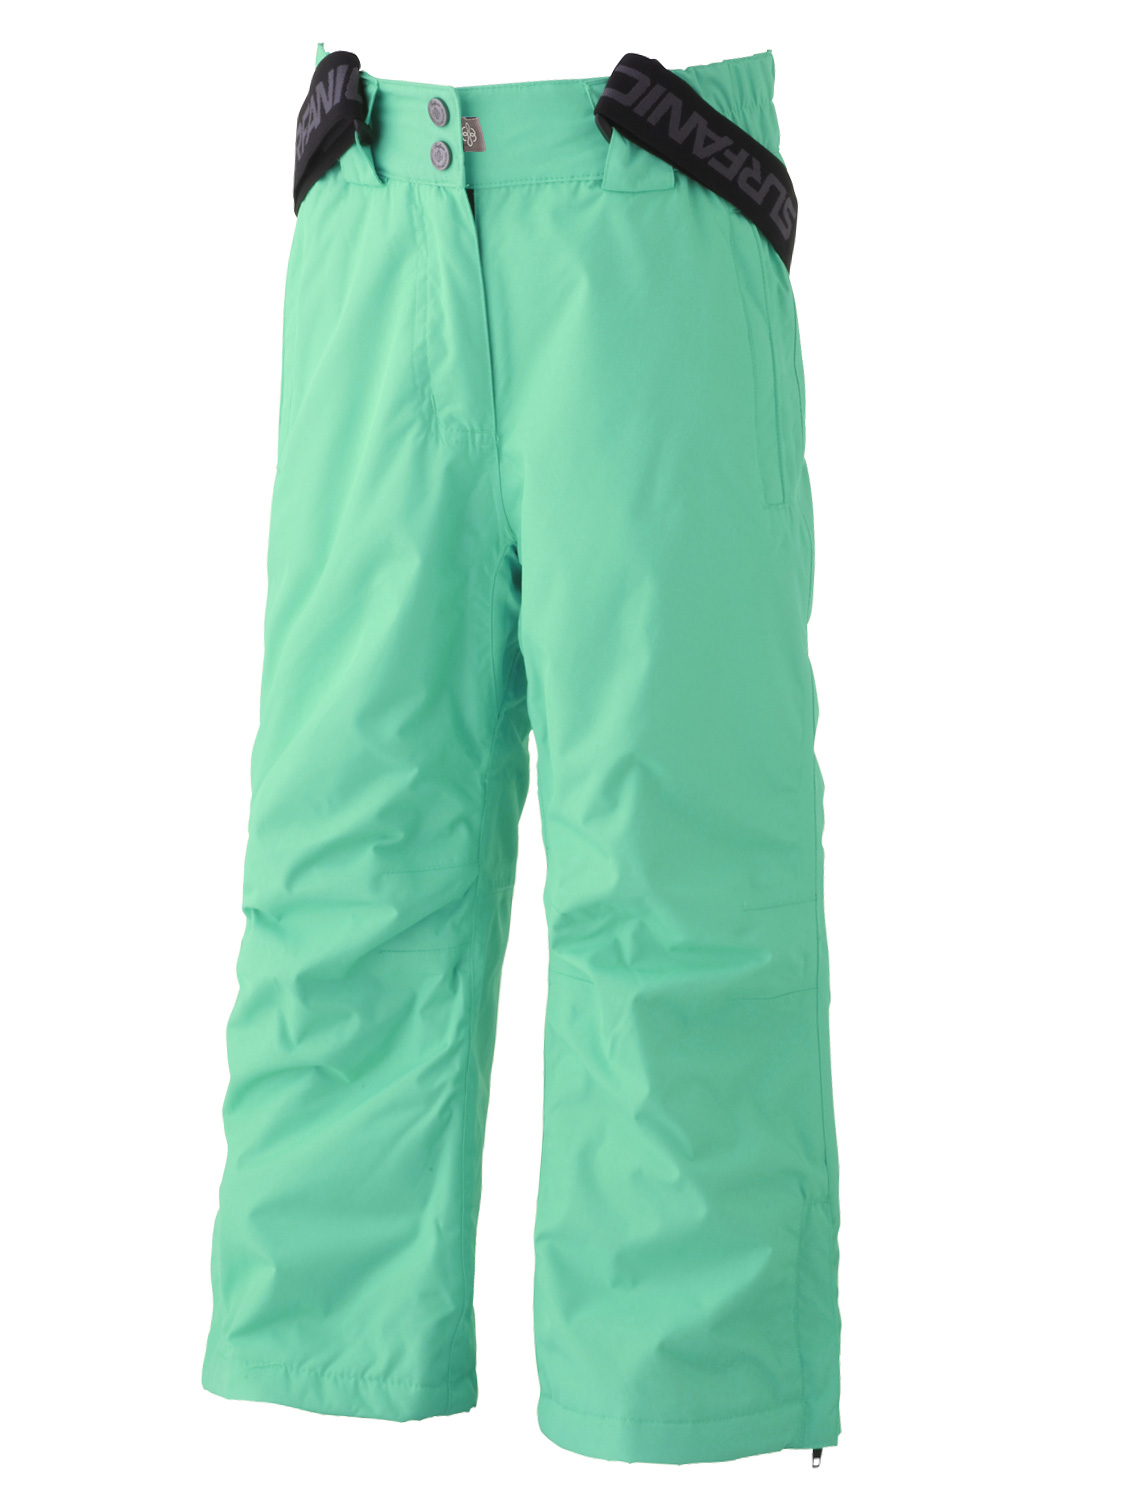 Girls Pixie Surftex Ski Pant Turquoise